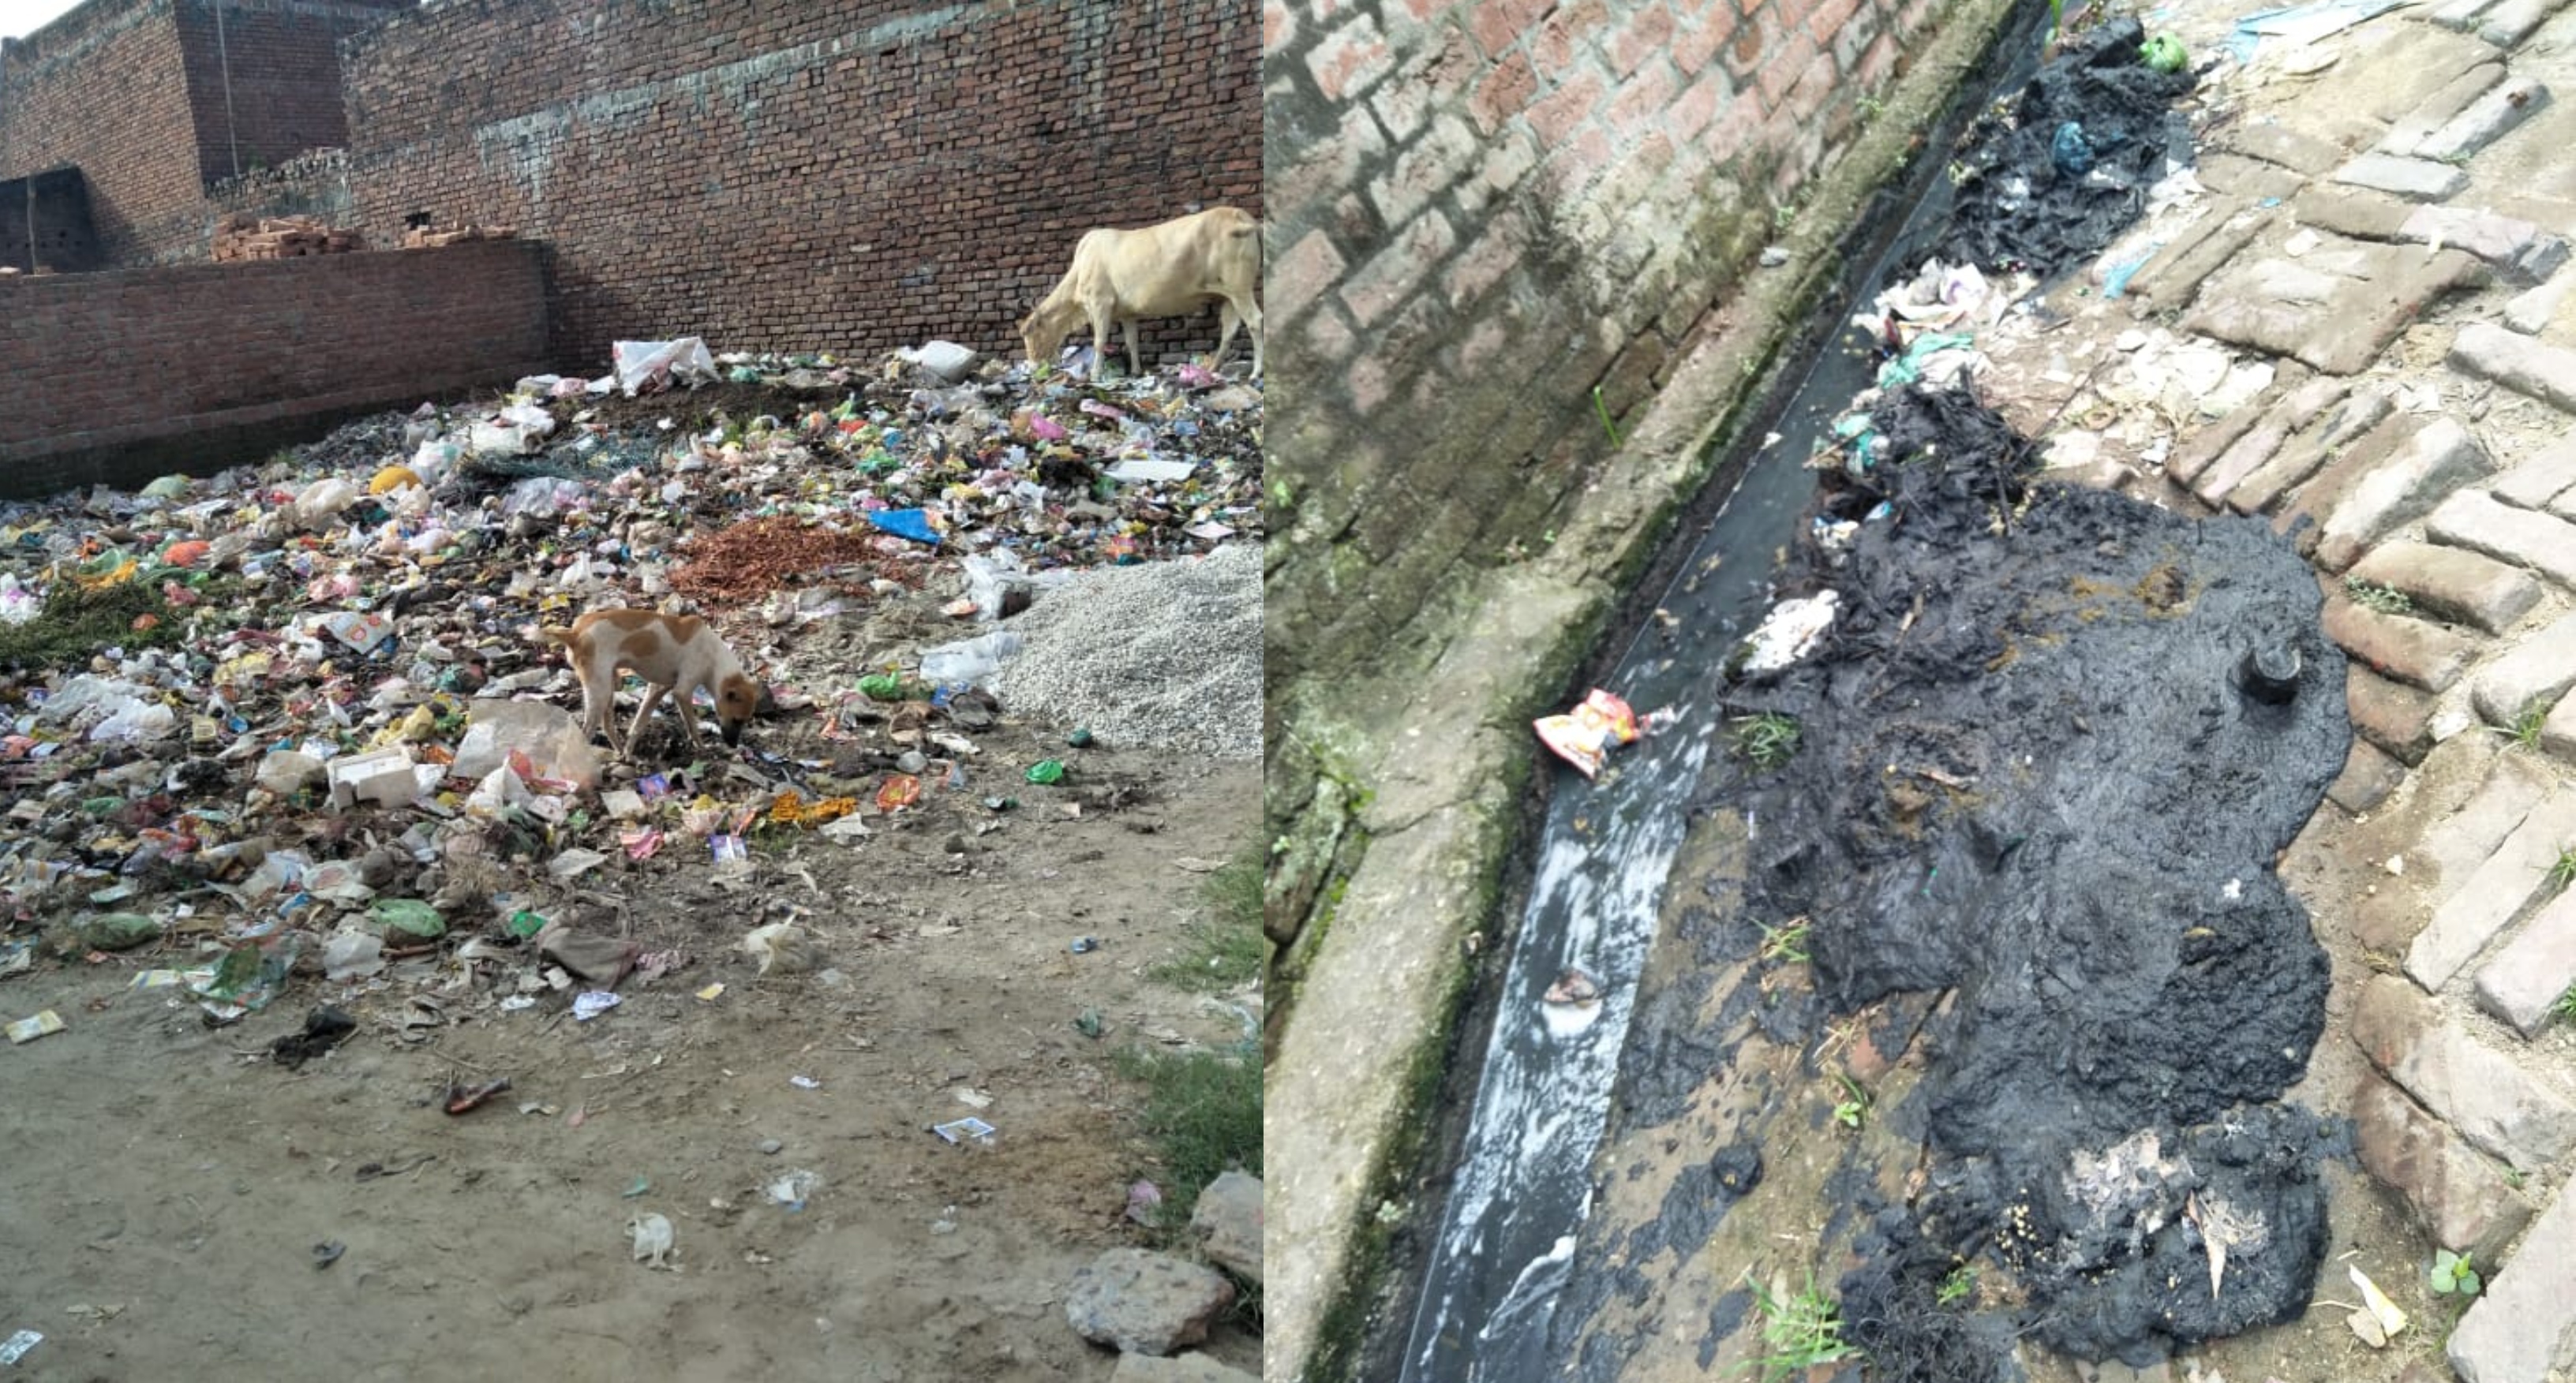 nagar nigam safai karamchari not working properly made area dirty